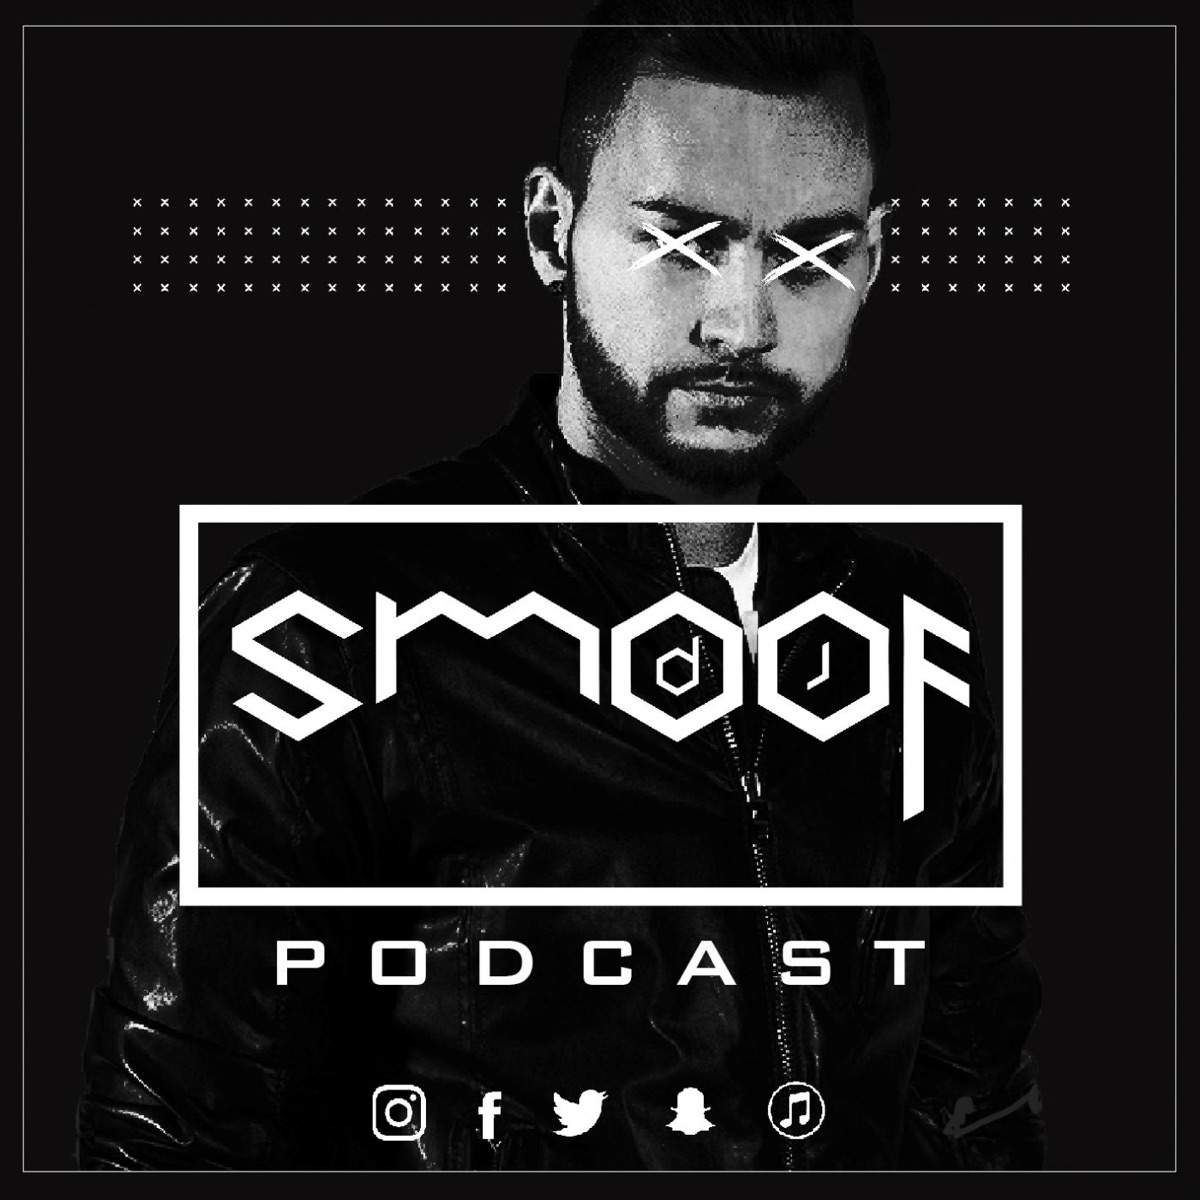 DJ SMOOF PODCAST – Podcast – Podtail